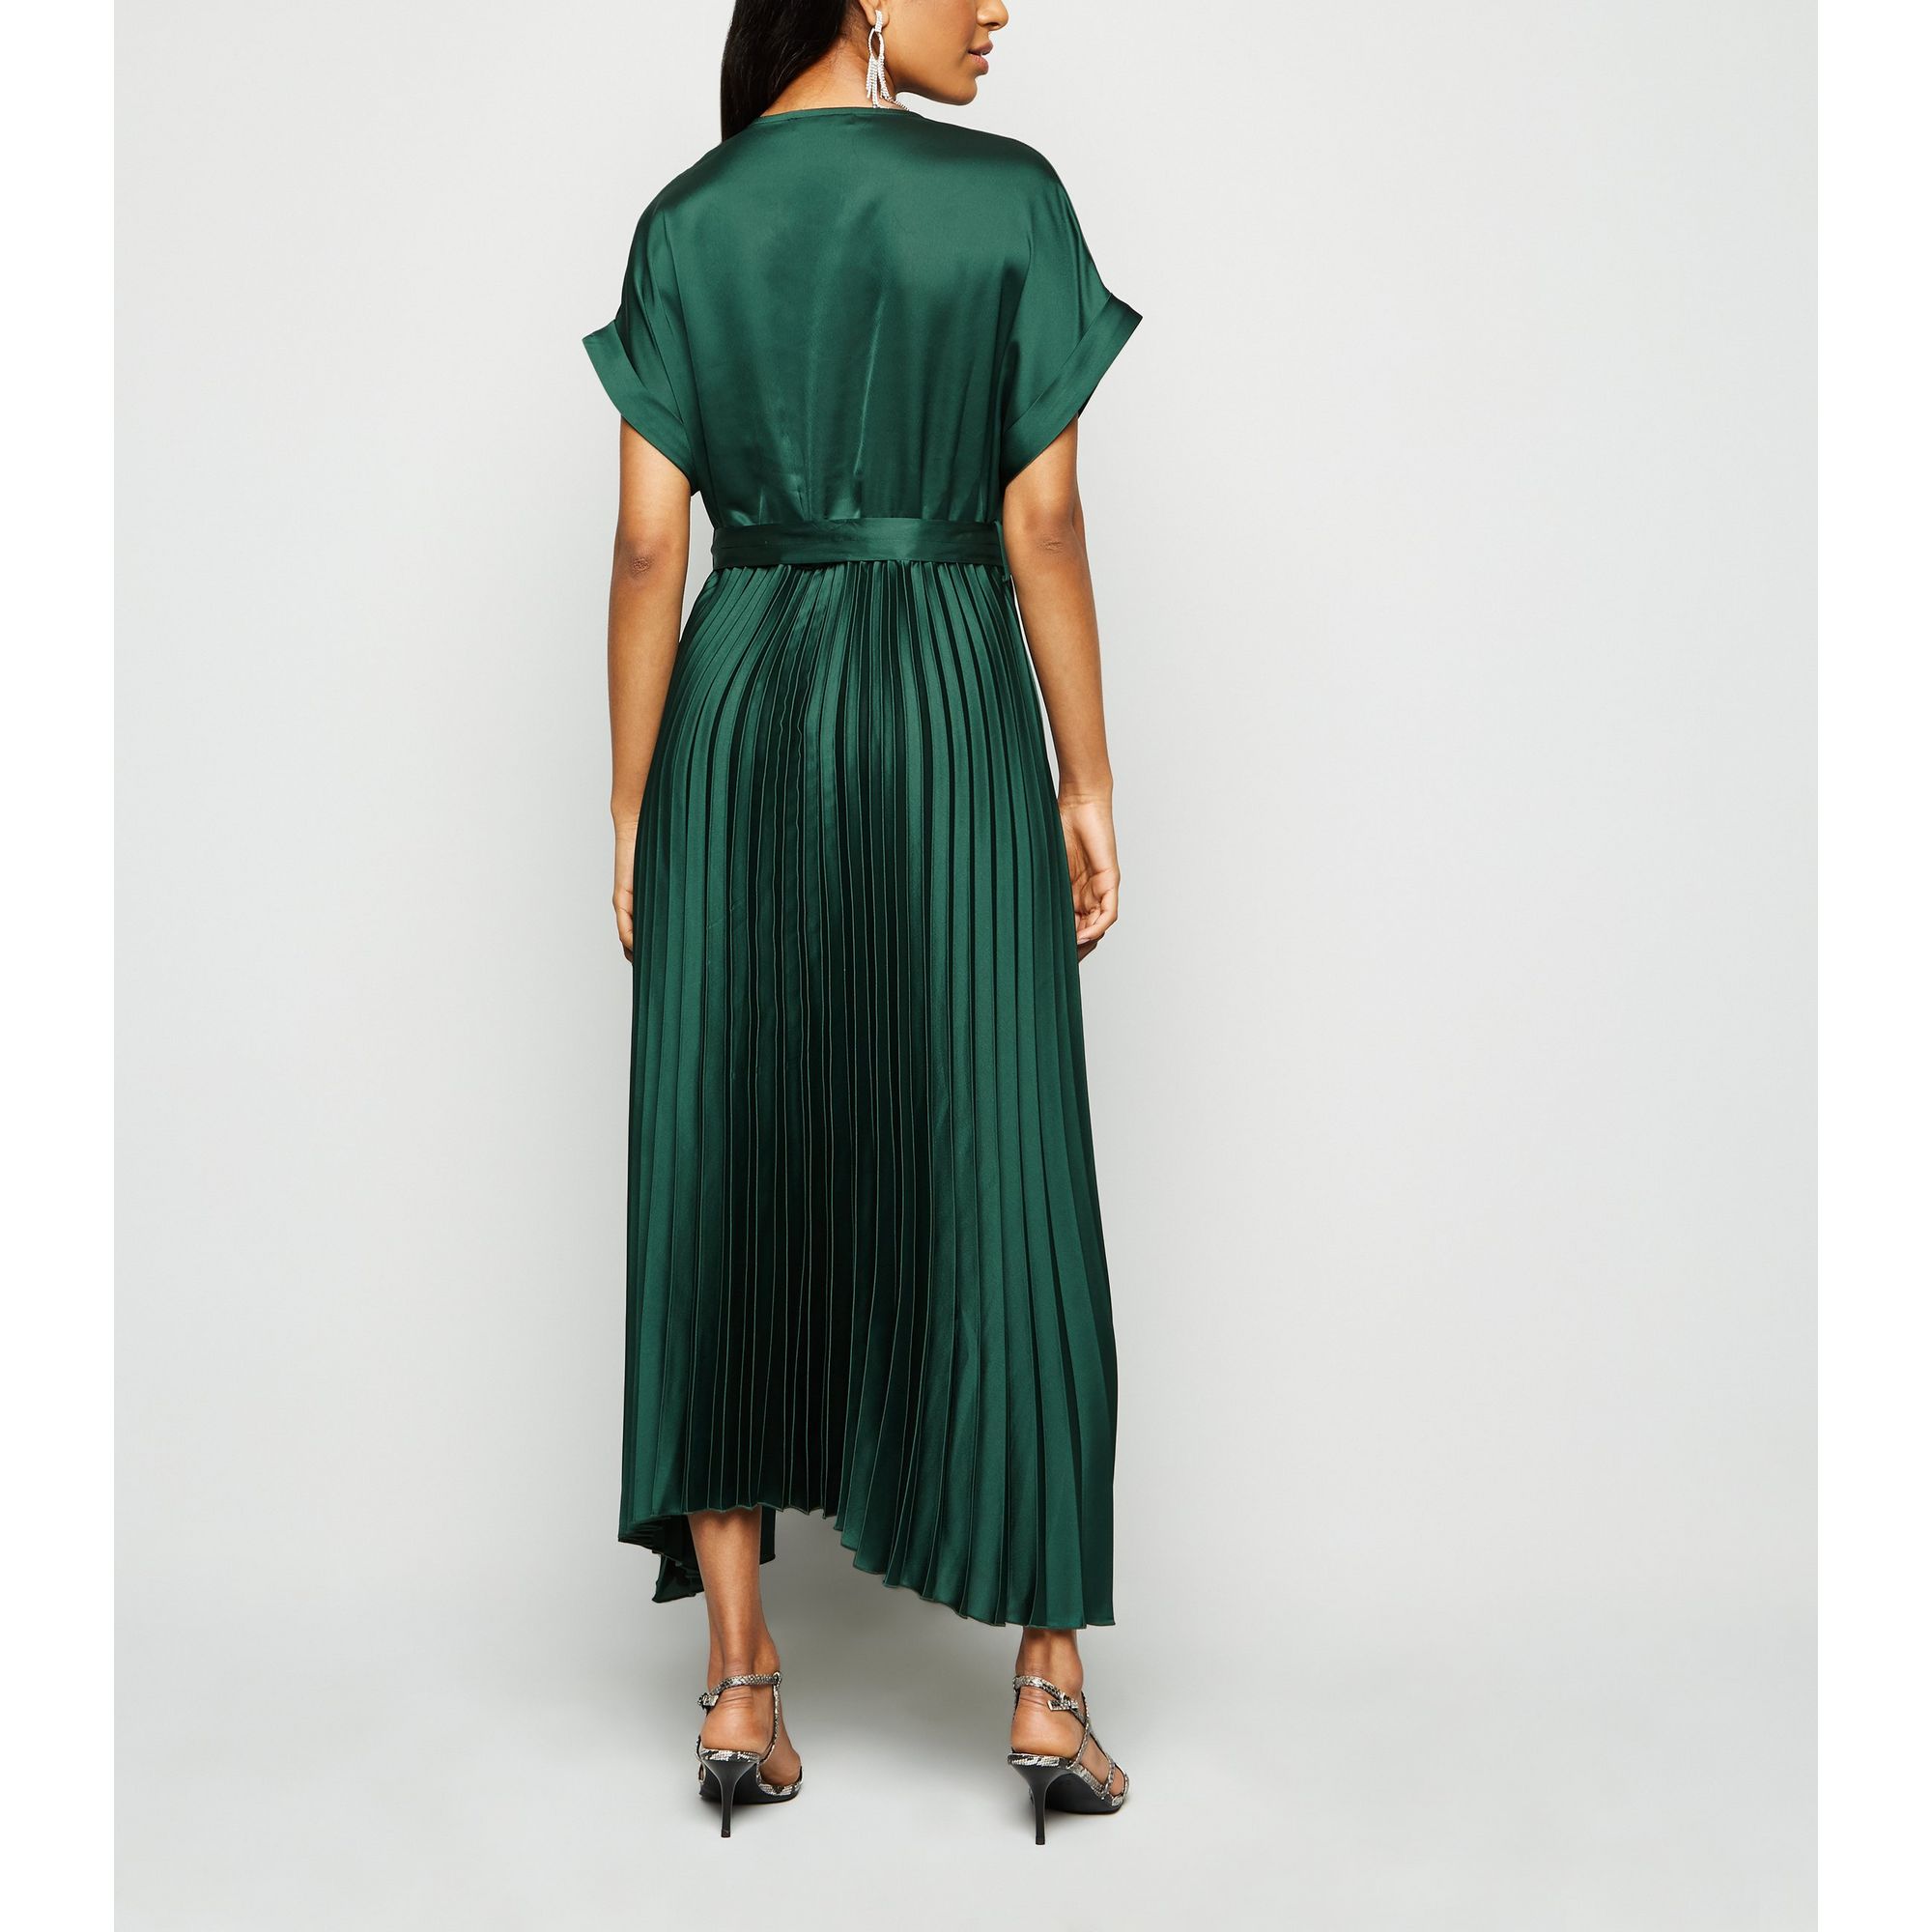 New Look Petite Pleated Satin Midi Dress | eBay